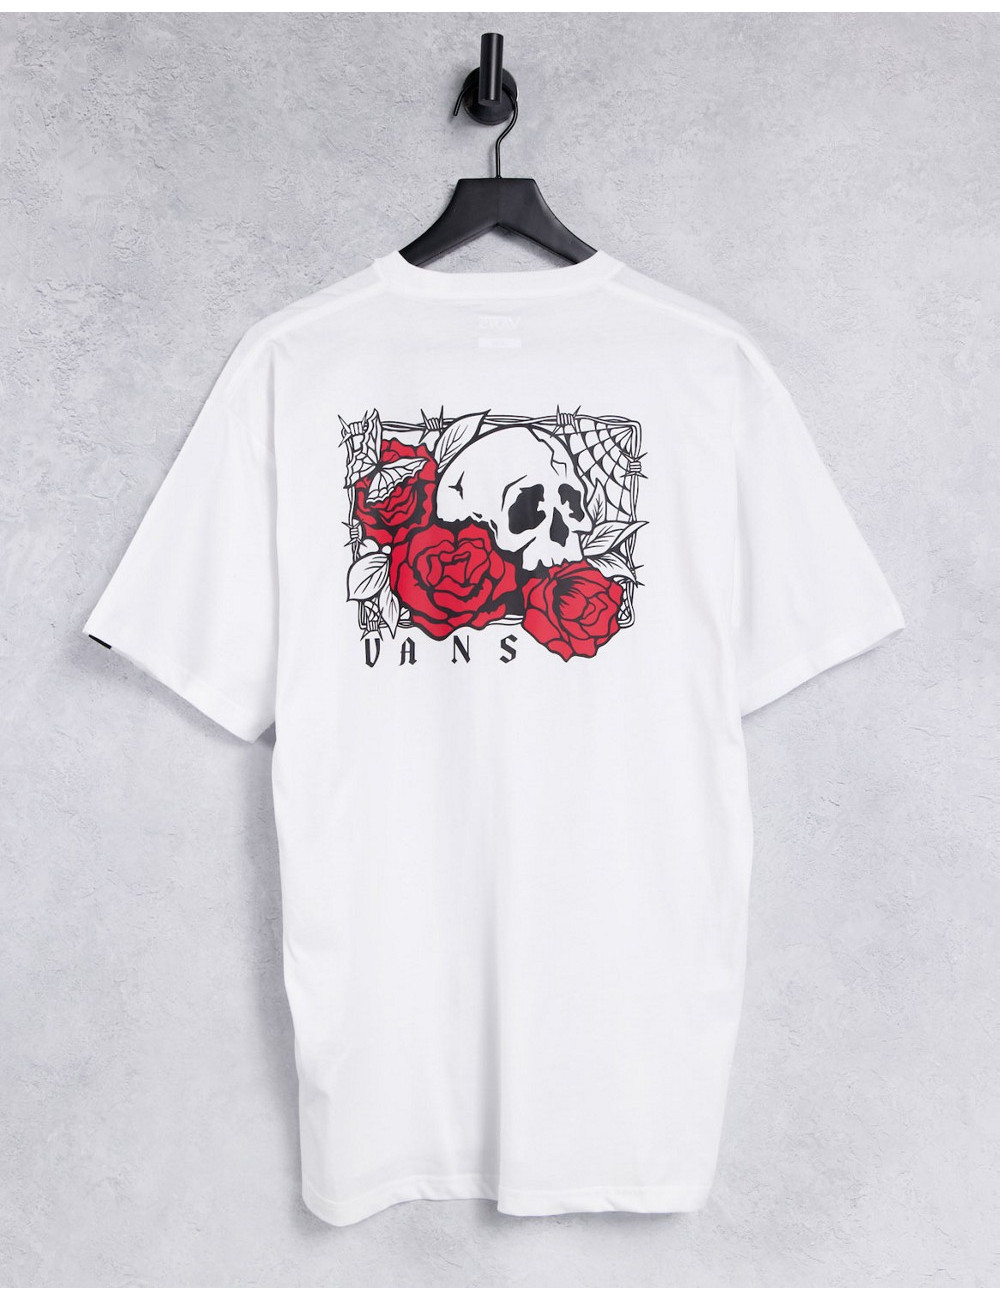 Vans Rose Bed t-shirt in white